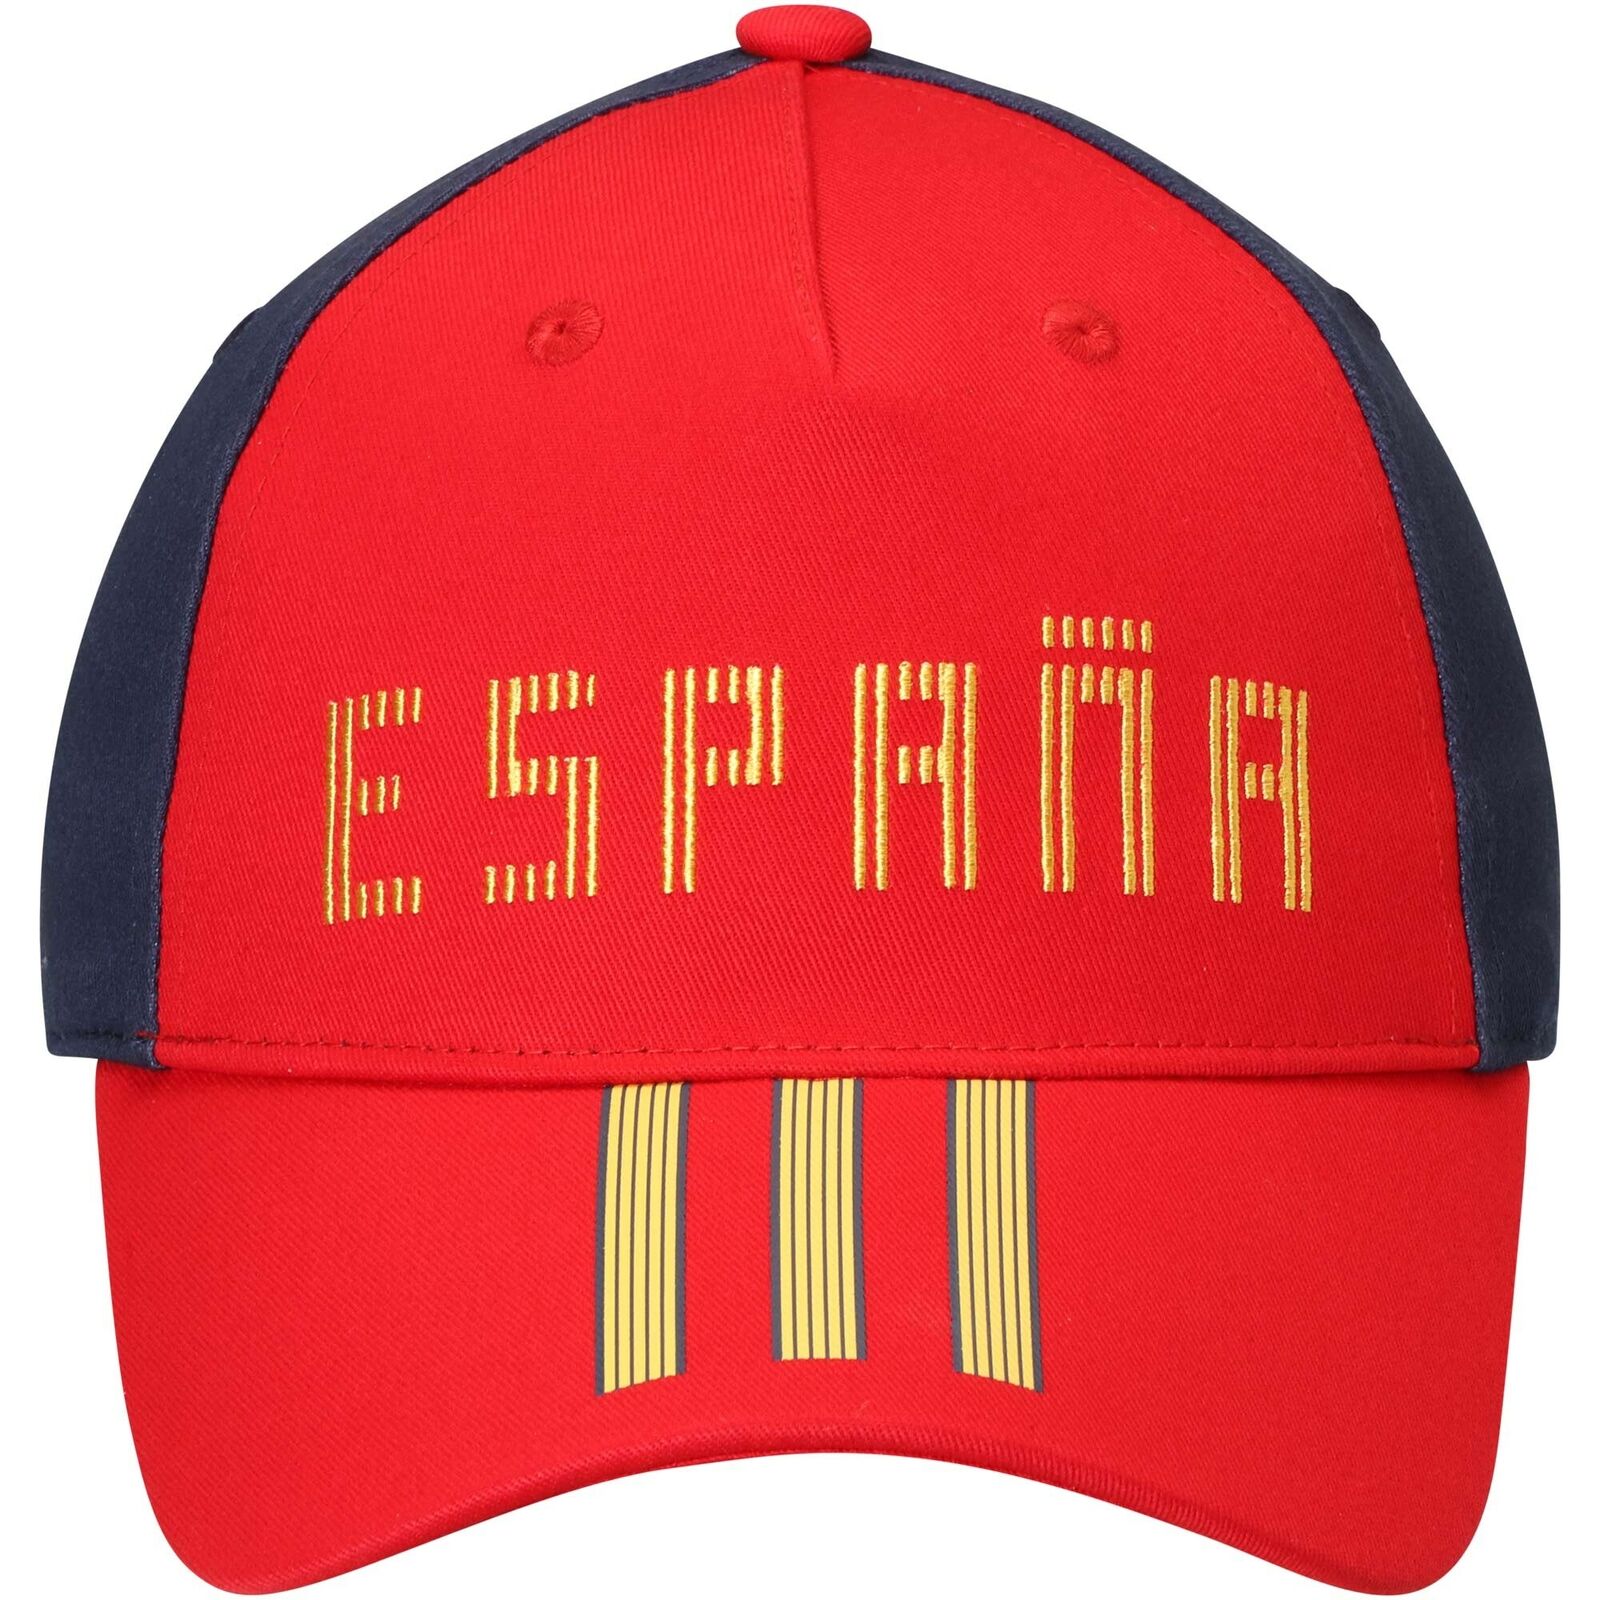 Nwt Adidas Spain Espana National Team Country Snapback Hat Red Navy